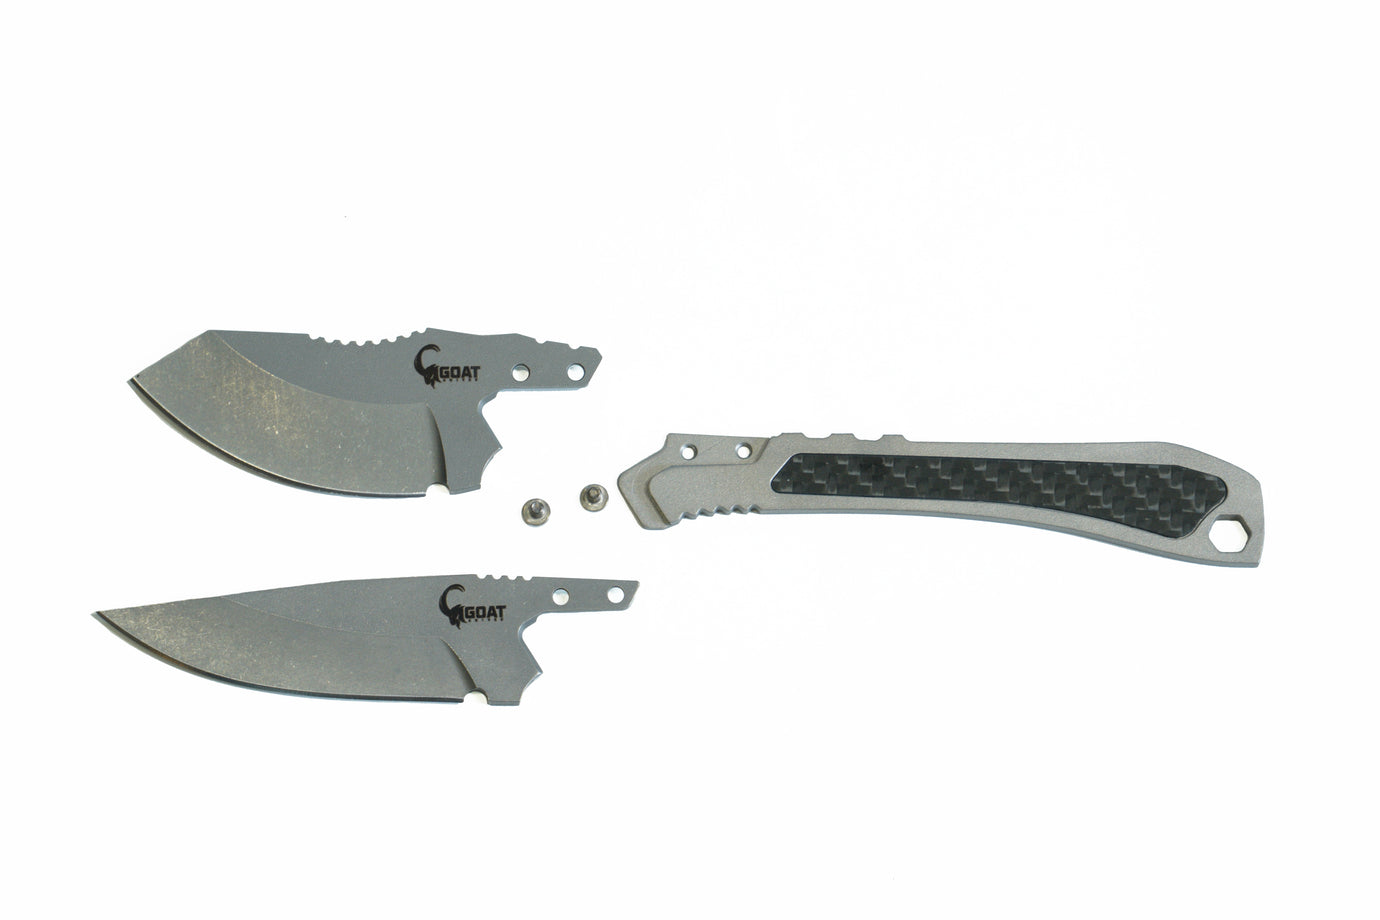 16 2 Handle 2 x 16 Single Edge Pro Fleshing Knives